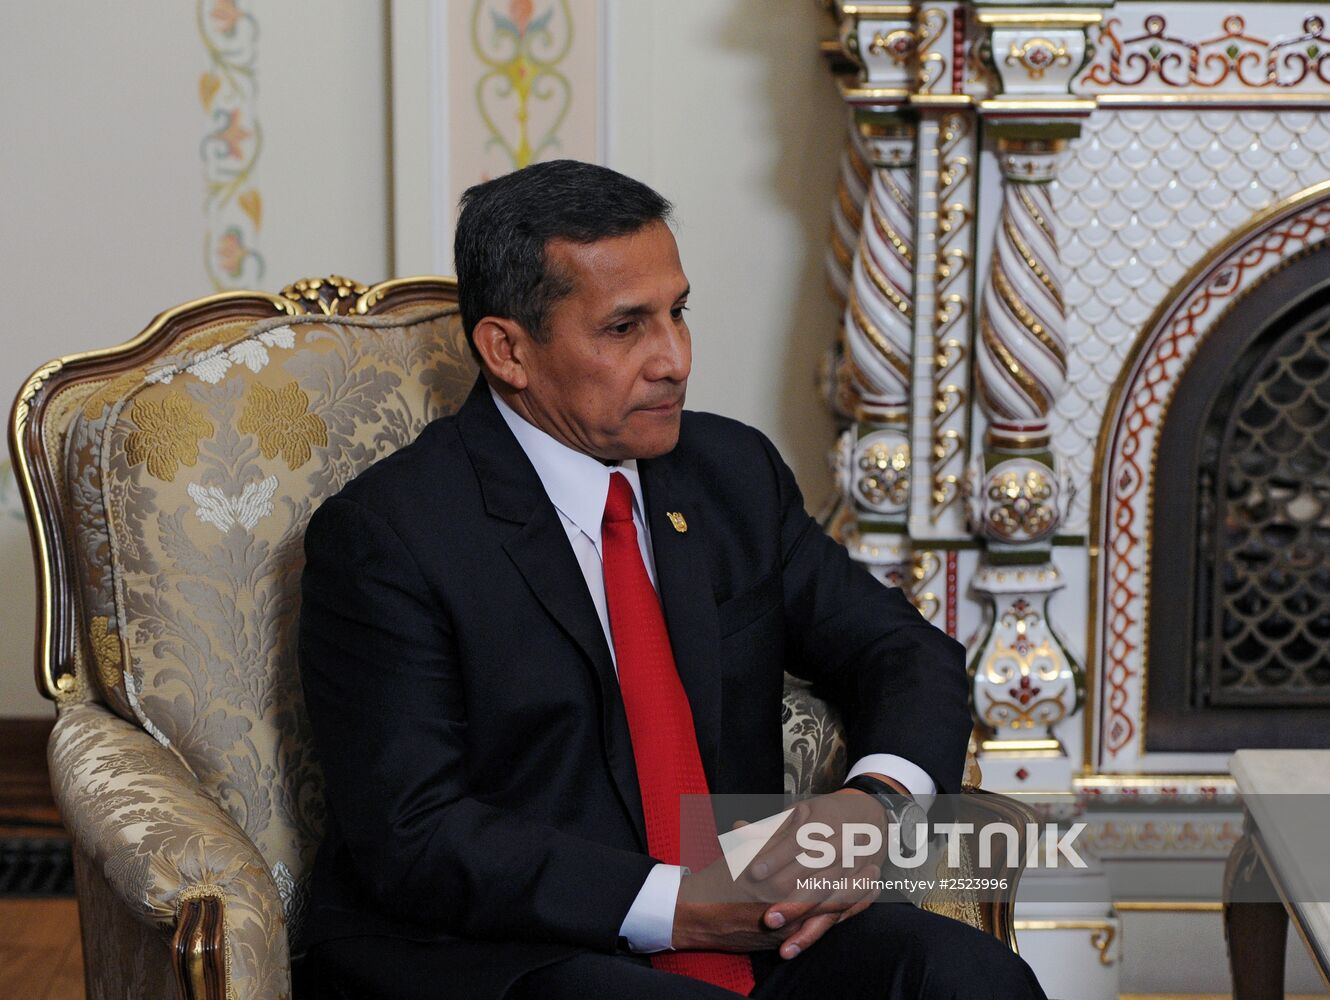 Vladimir Putin meets with Ollanta Humala